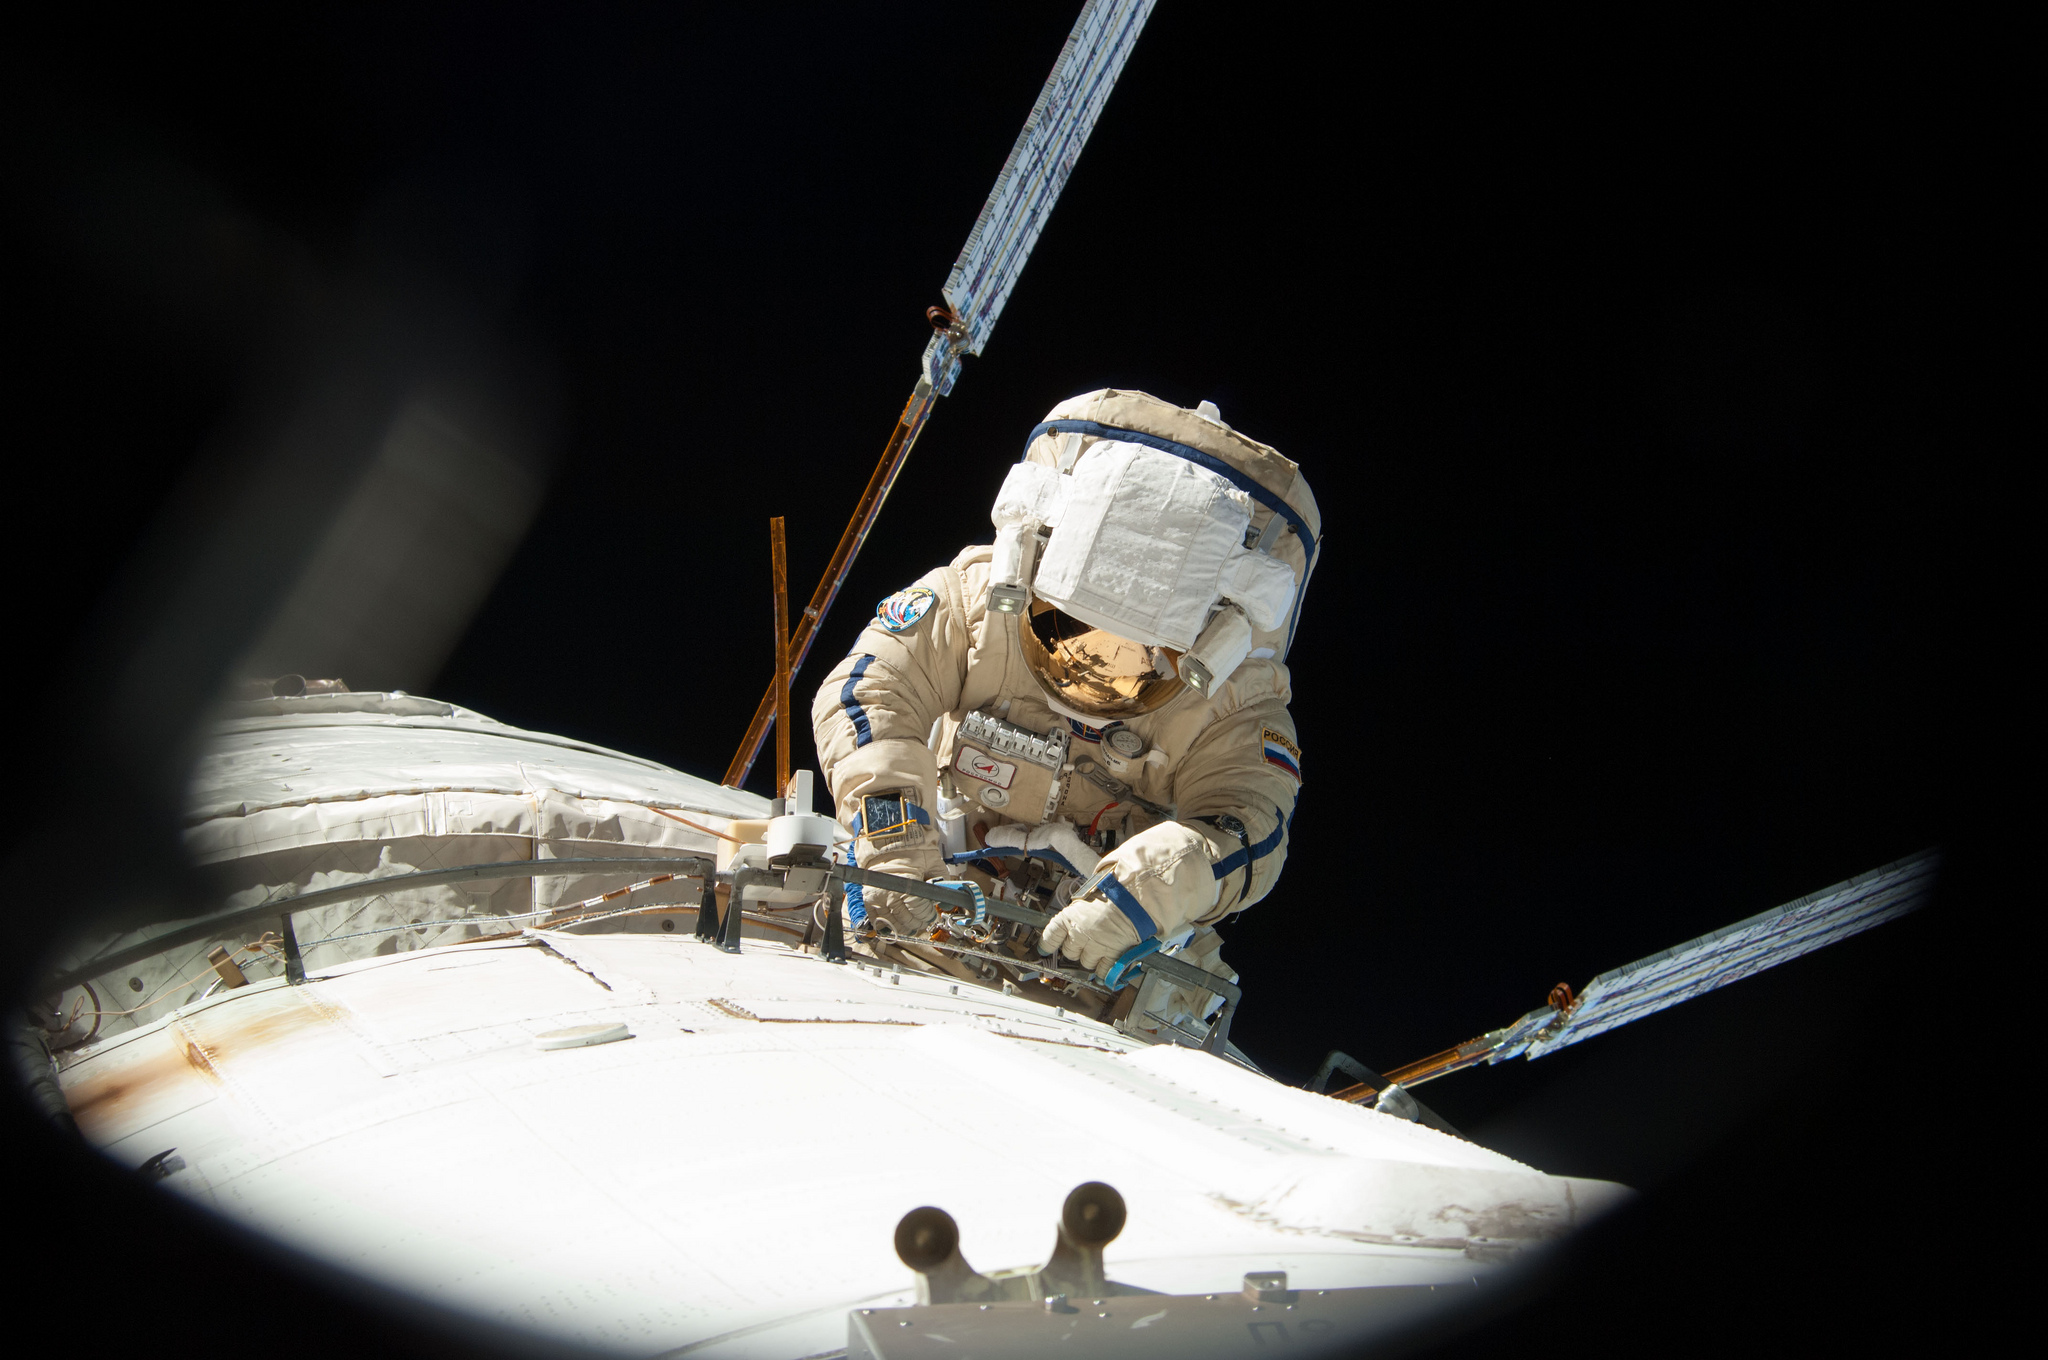 cosmonaut Alexander Misurkin conducts a spacewalk outside the International Space Station